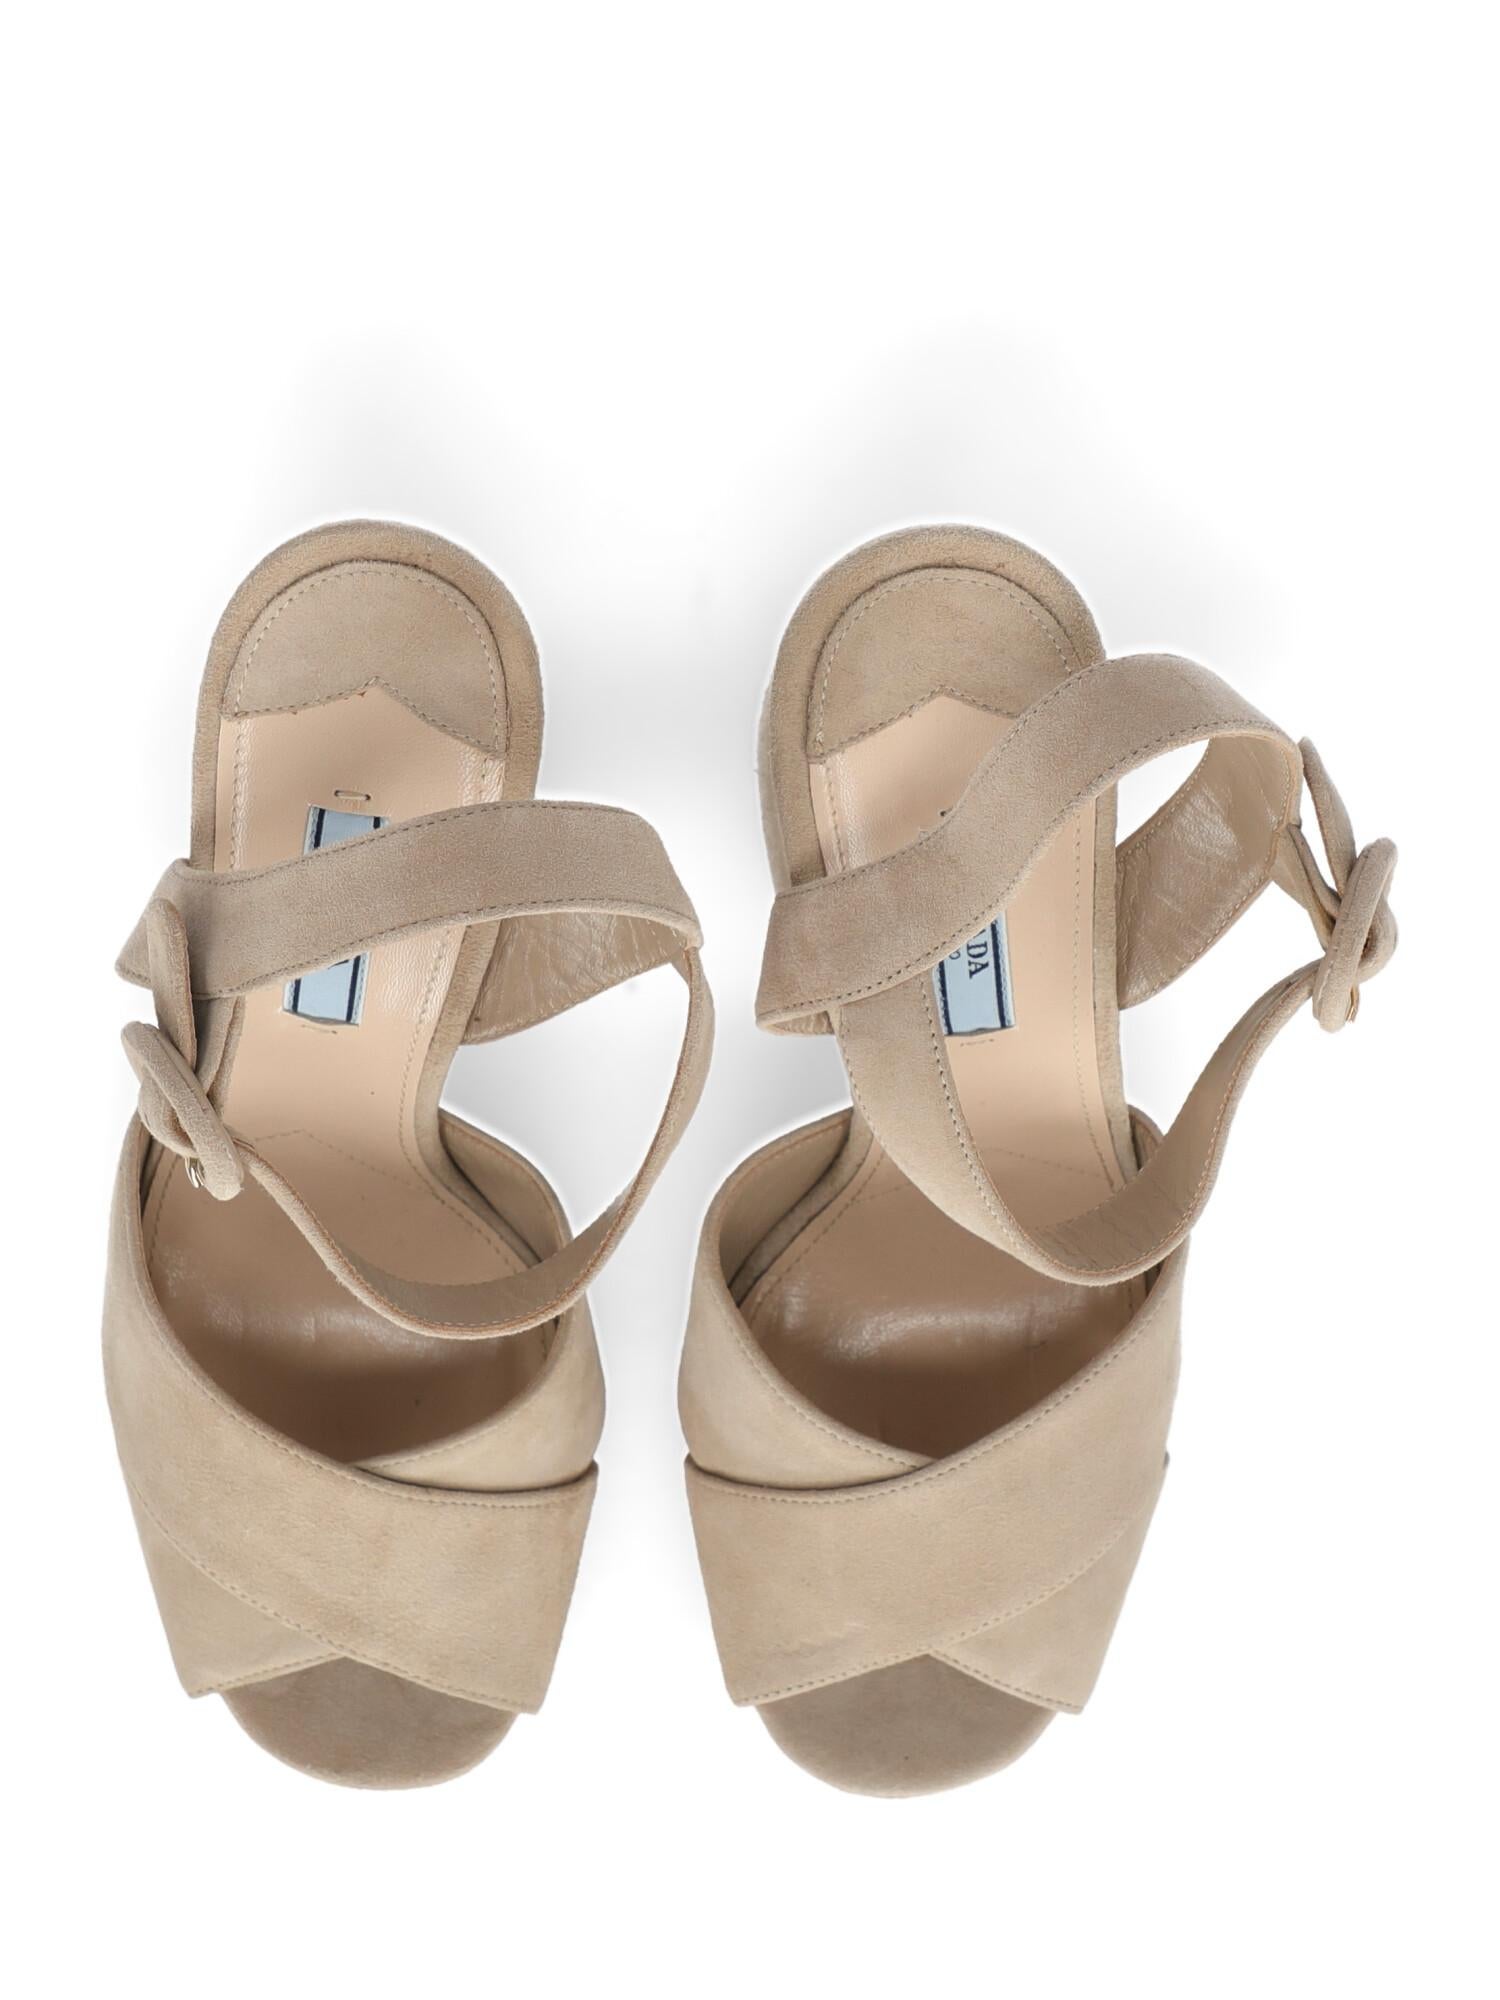 Prada Woman Sandals Beige Leather IT 39.5 For Sale 2